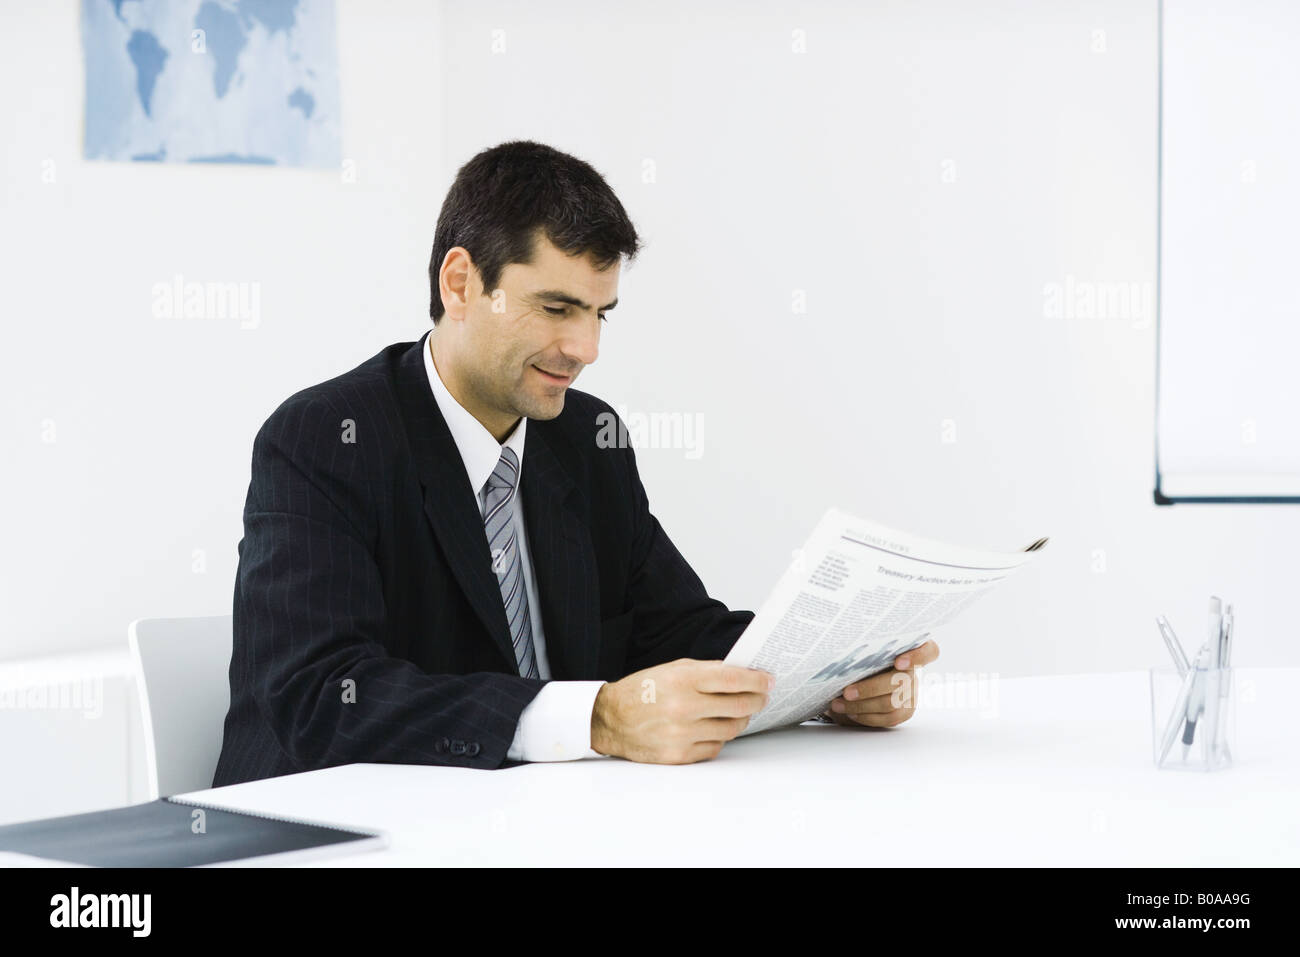 Businessman sitting at desk, reading newspaper, smiling Stock Photo